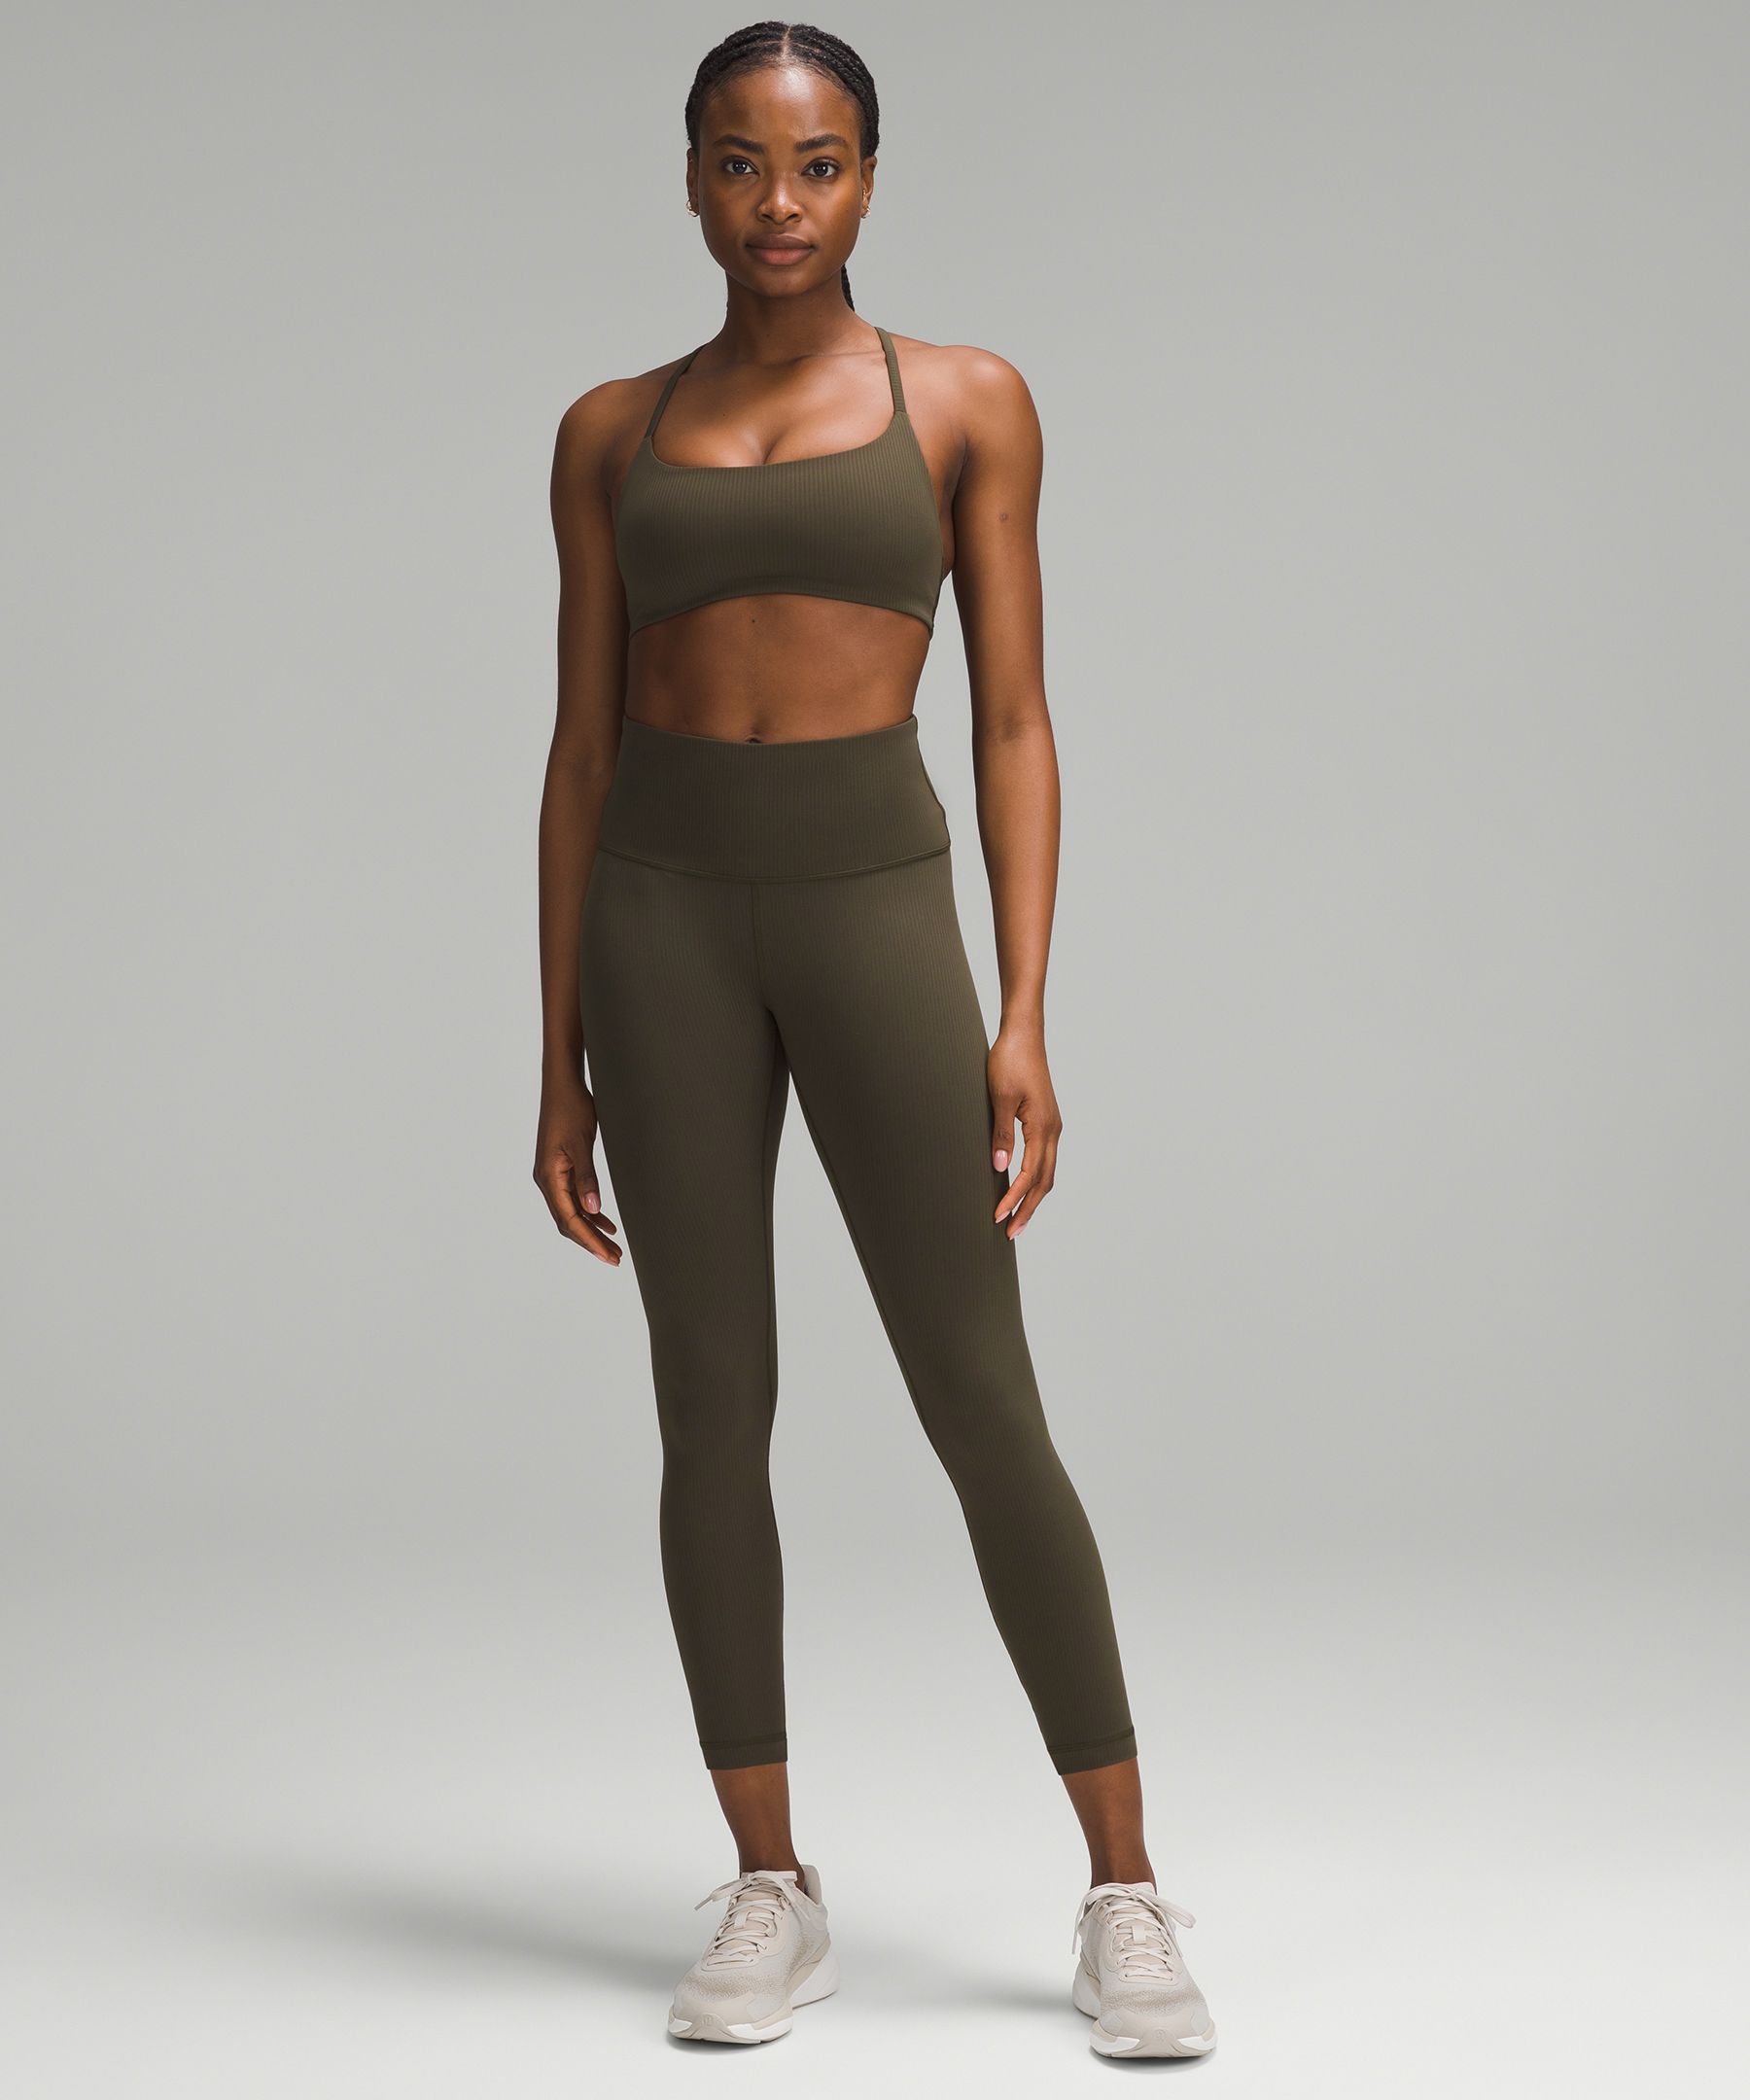 Lululemon/Orange Theory Fitness Black Leggings